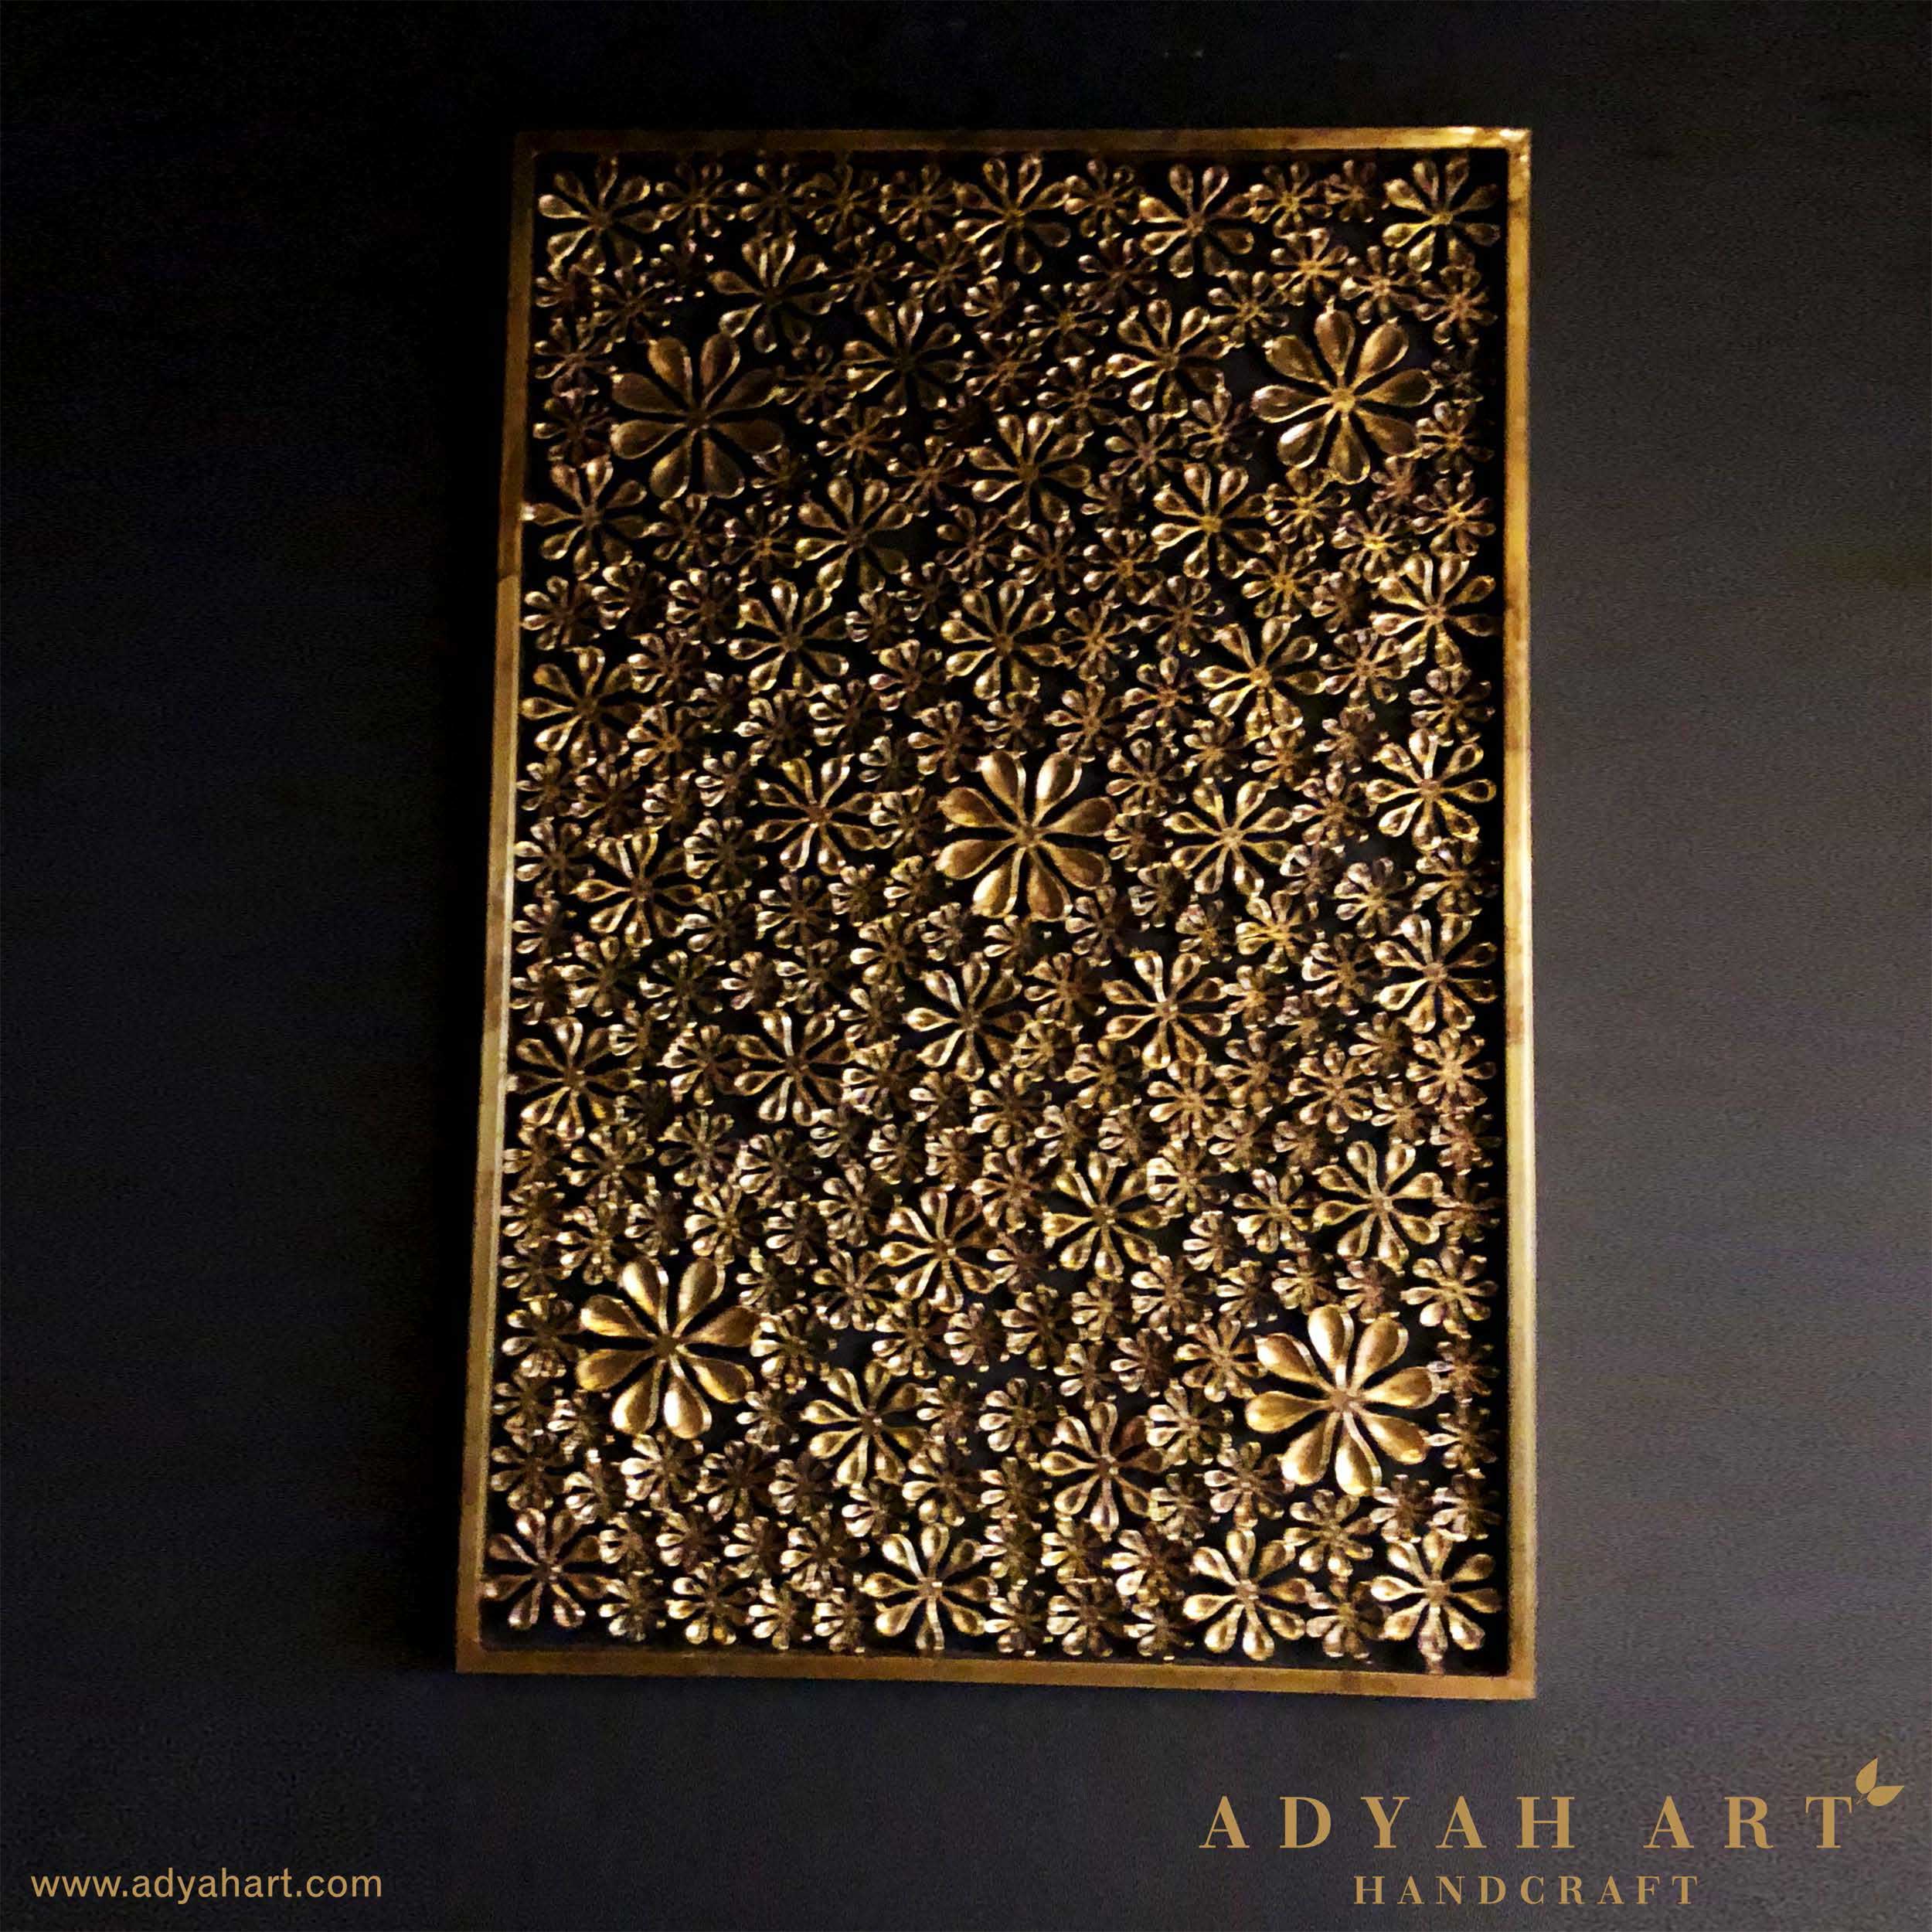 Adyah Art